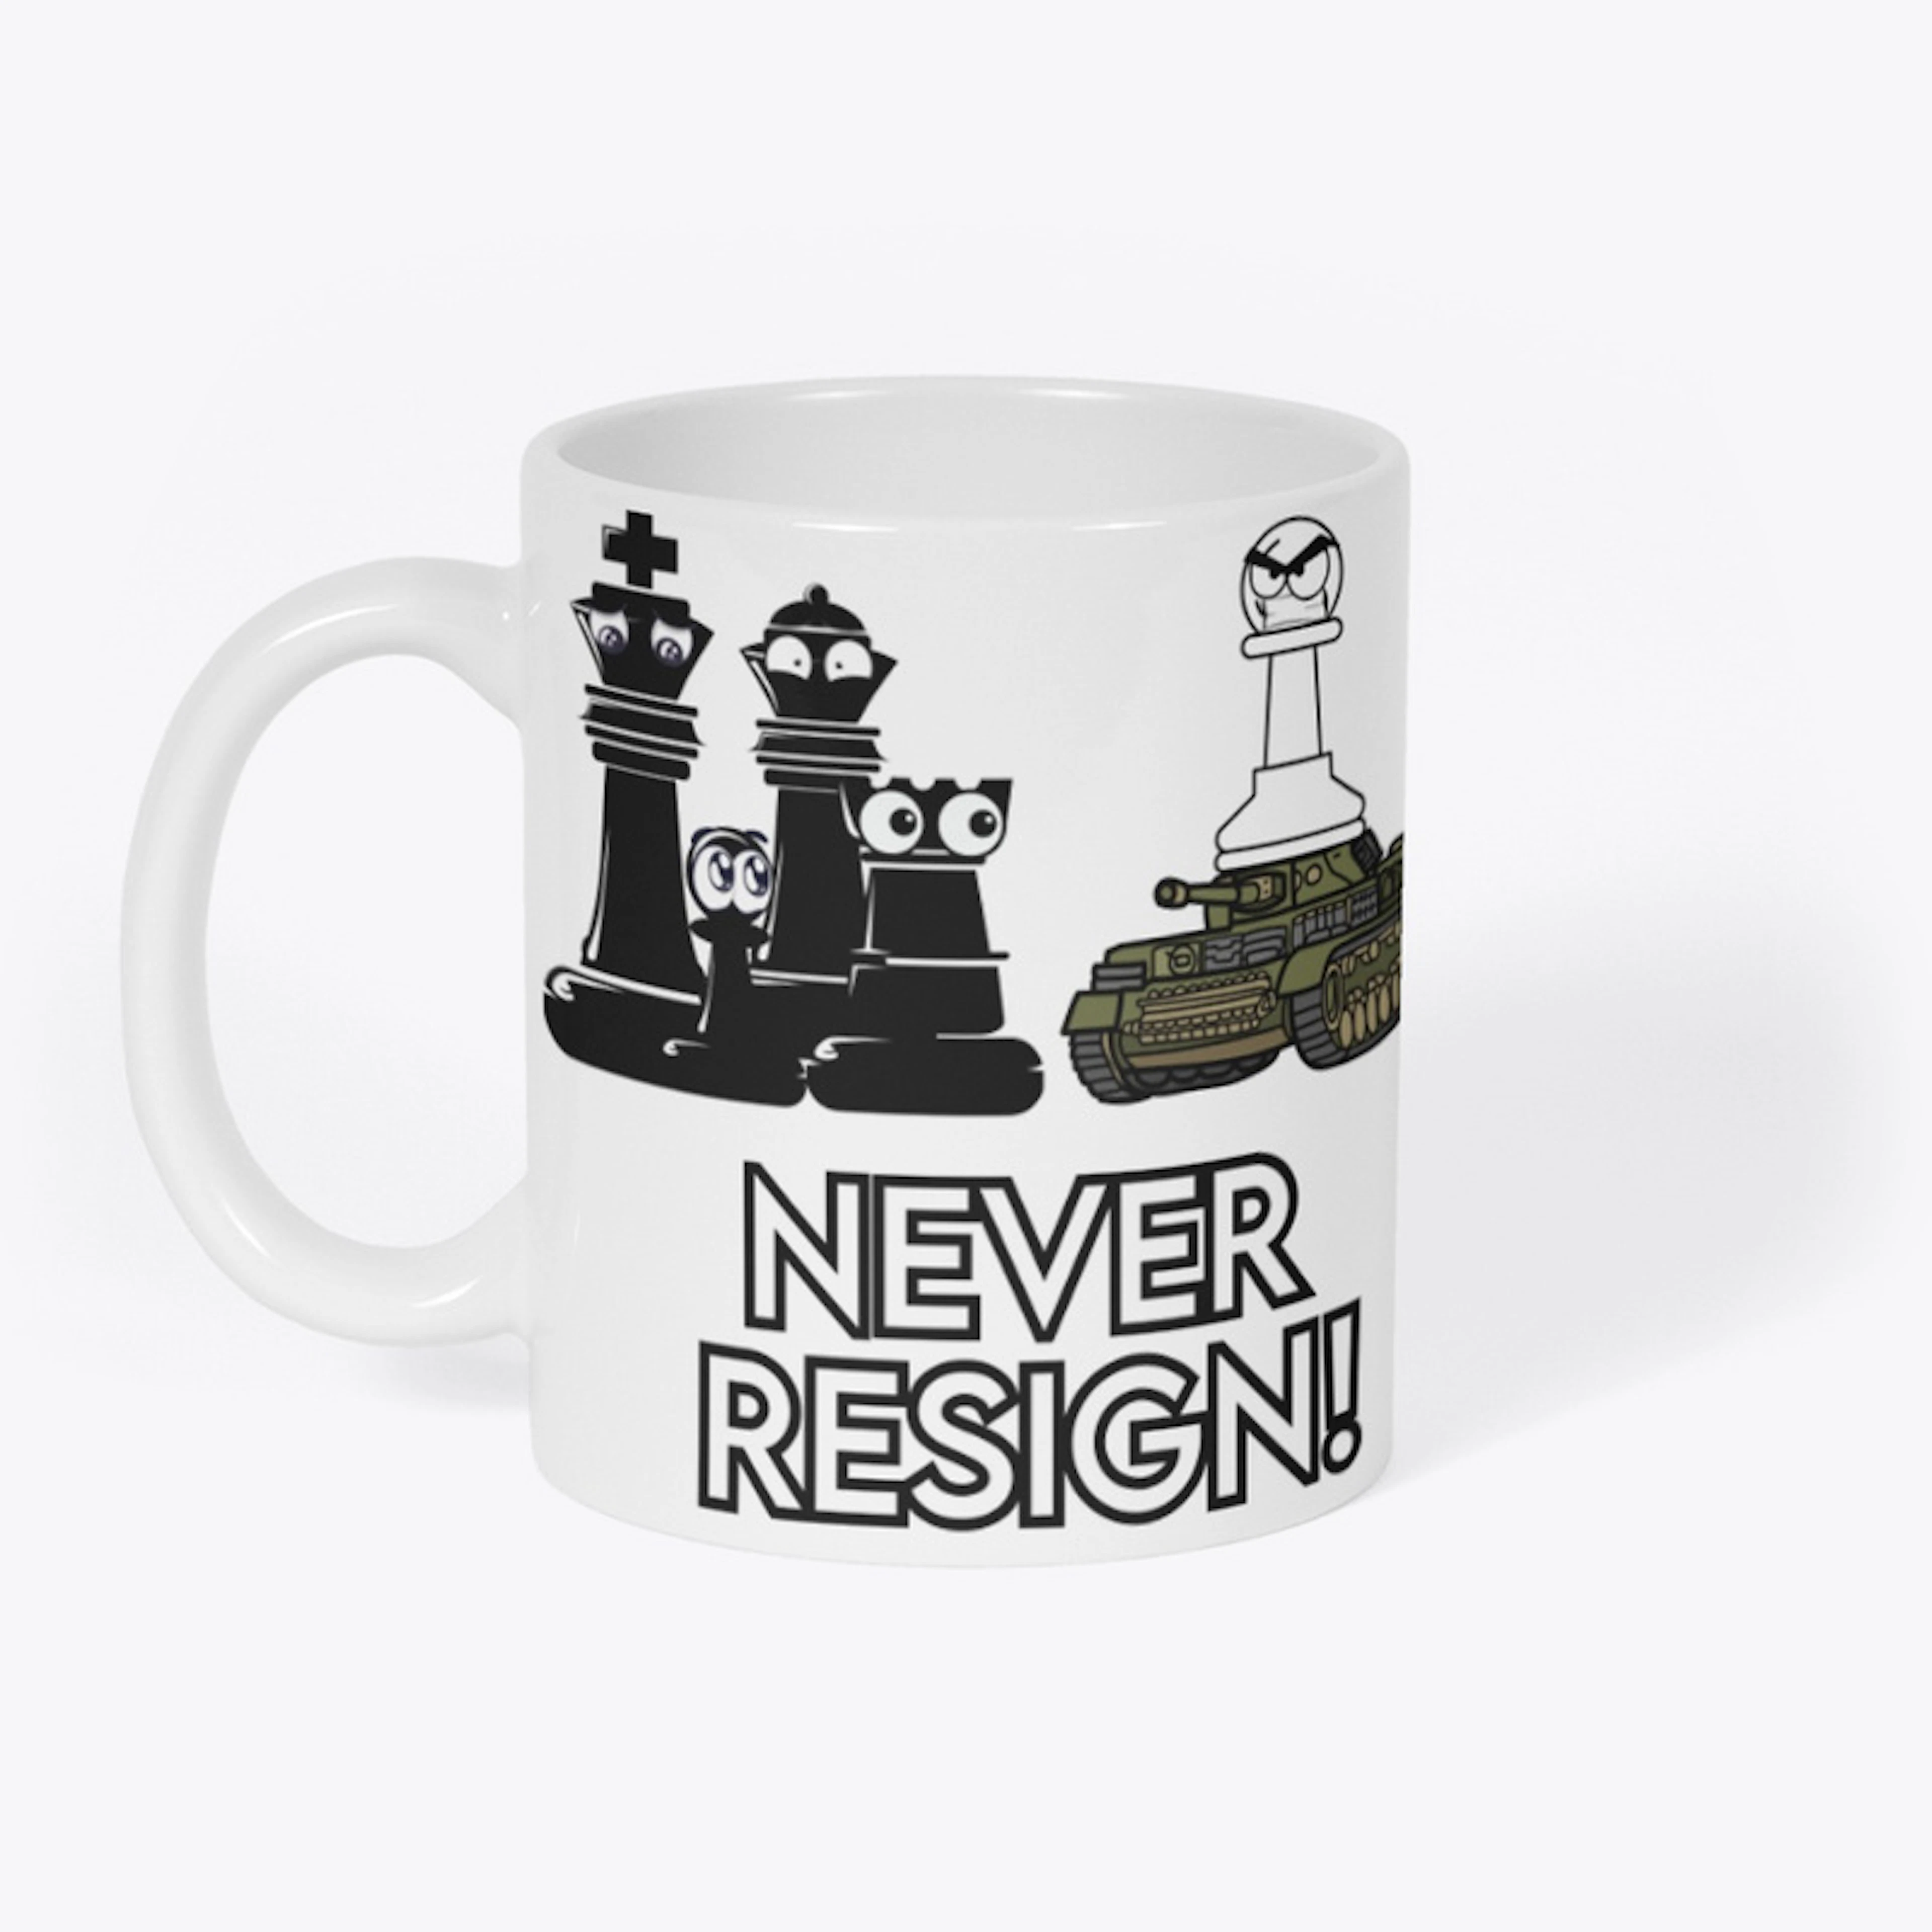 Never Resign in Chess!